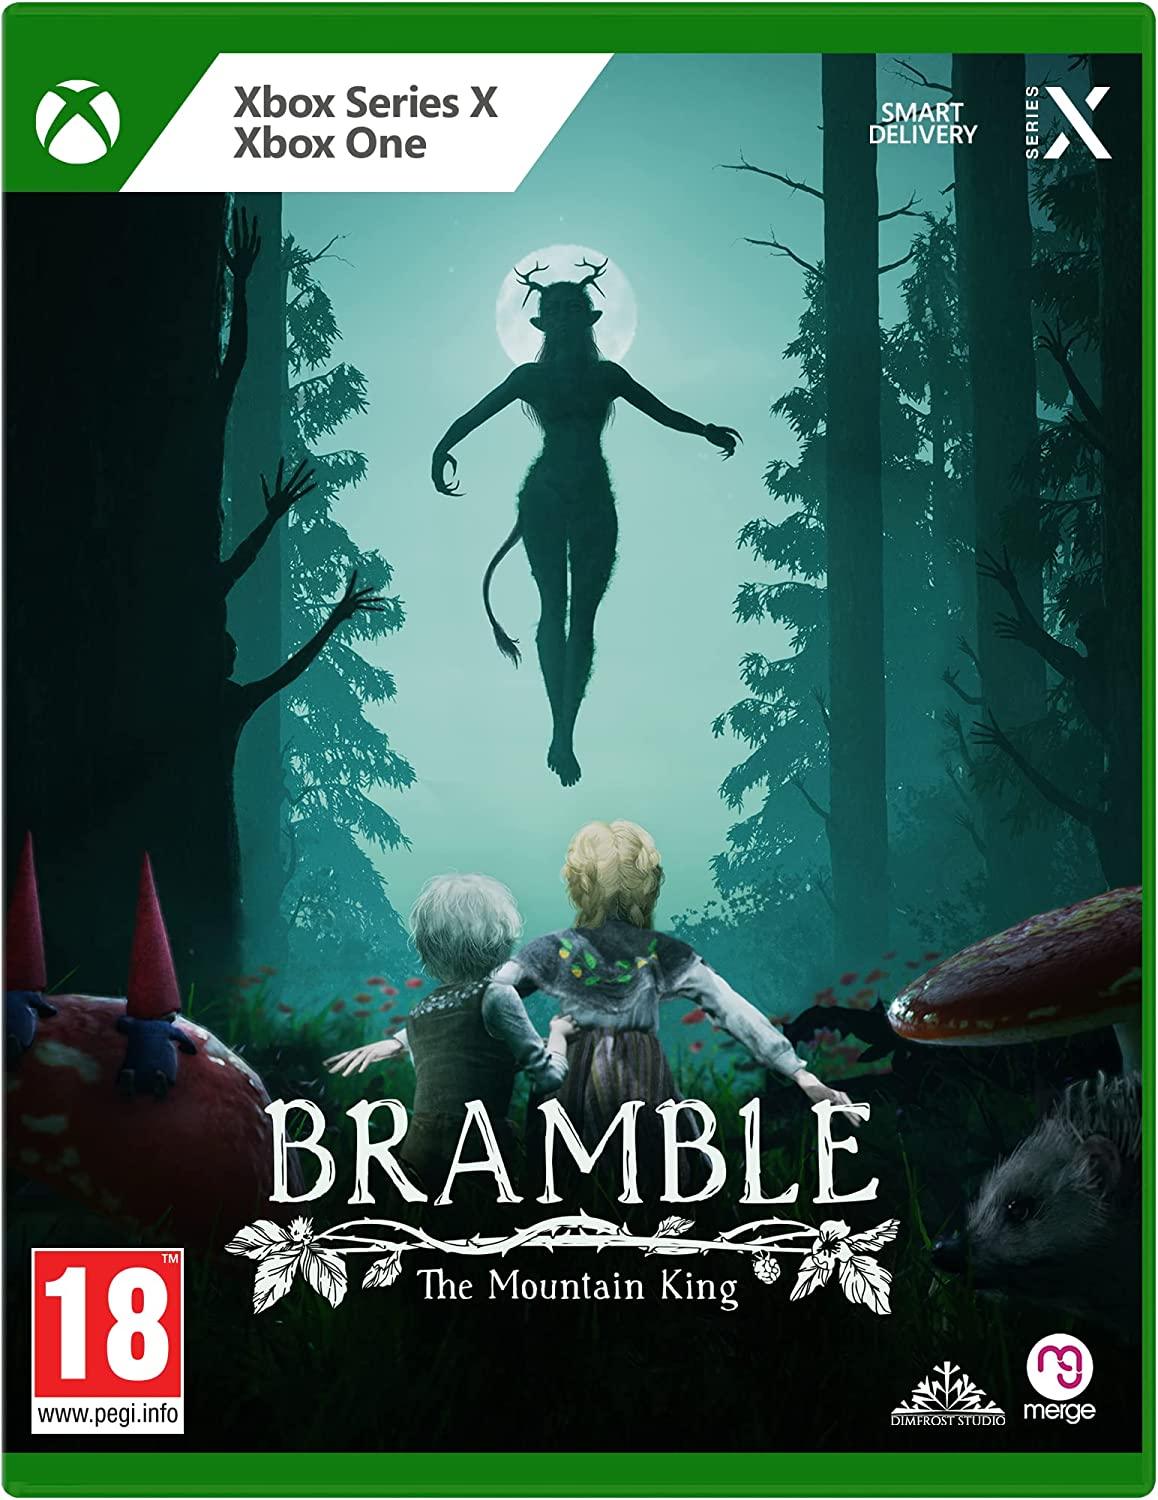 Bramble: The Mountain King (Xbox Series X) (Xbox One) - GameStore.mt | Powered by Flutisat